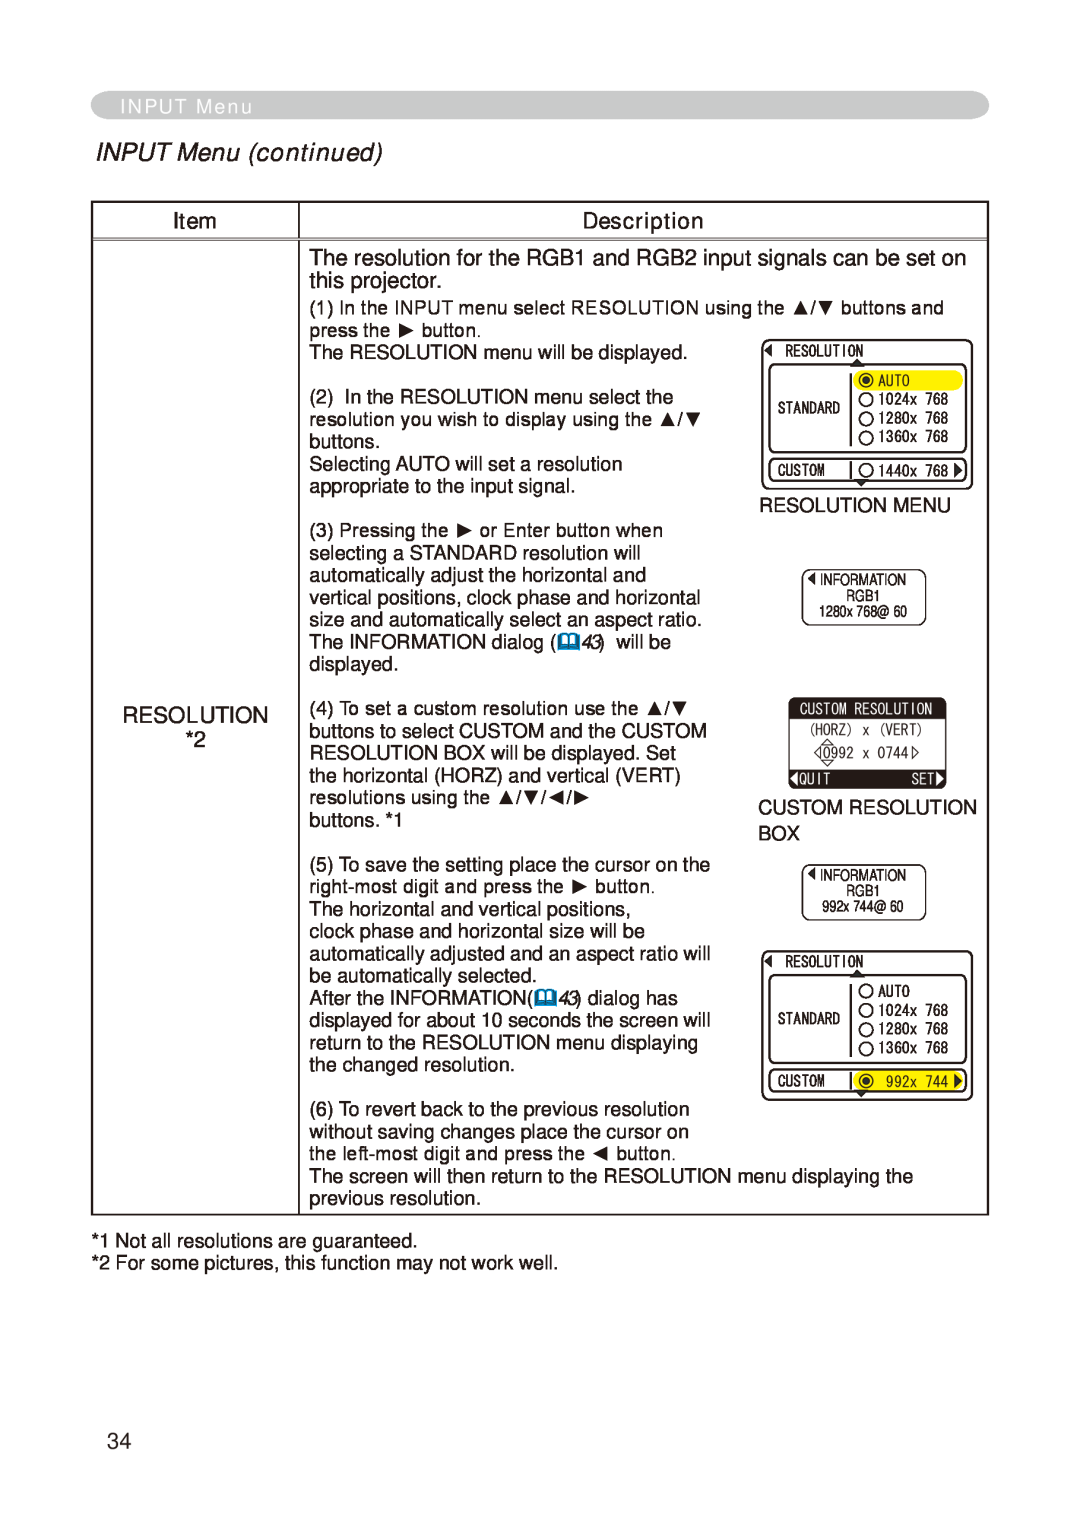 Dukane 8776-RJ, 8755E-RJ user manual INPUT Menu continued, The RESOLUTION menu will be displayed 